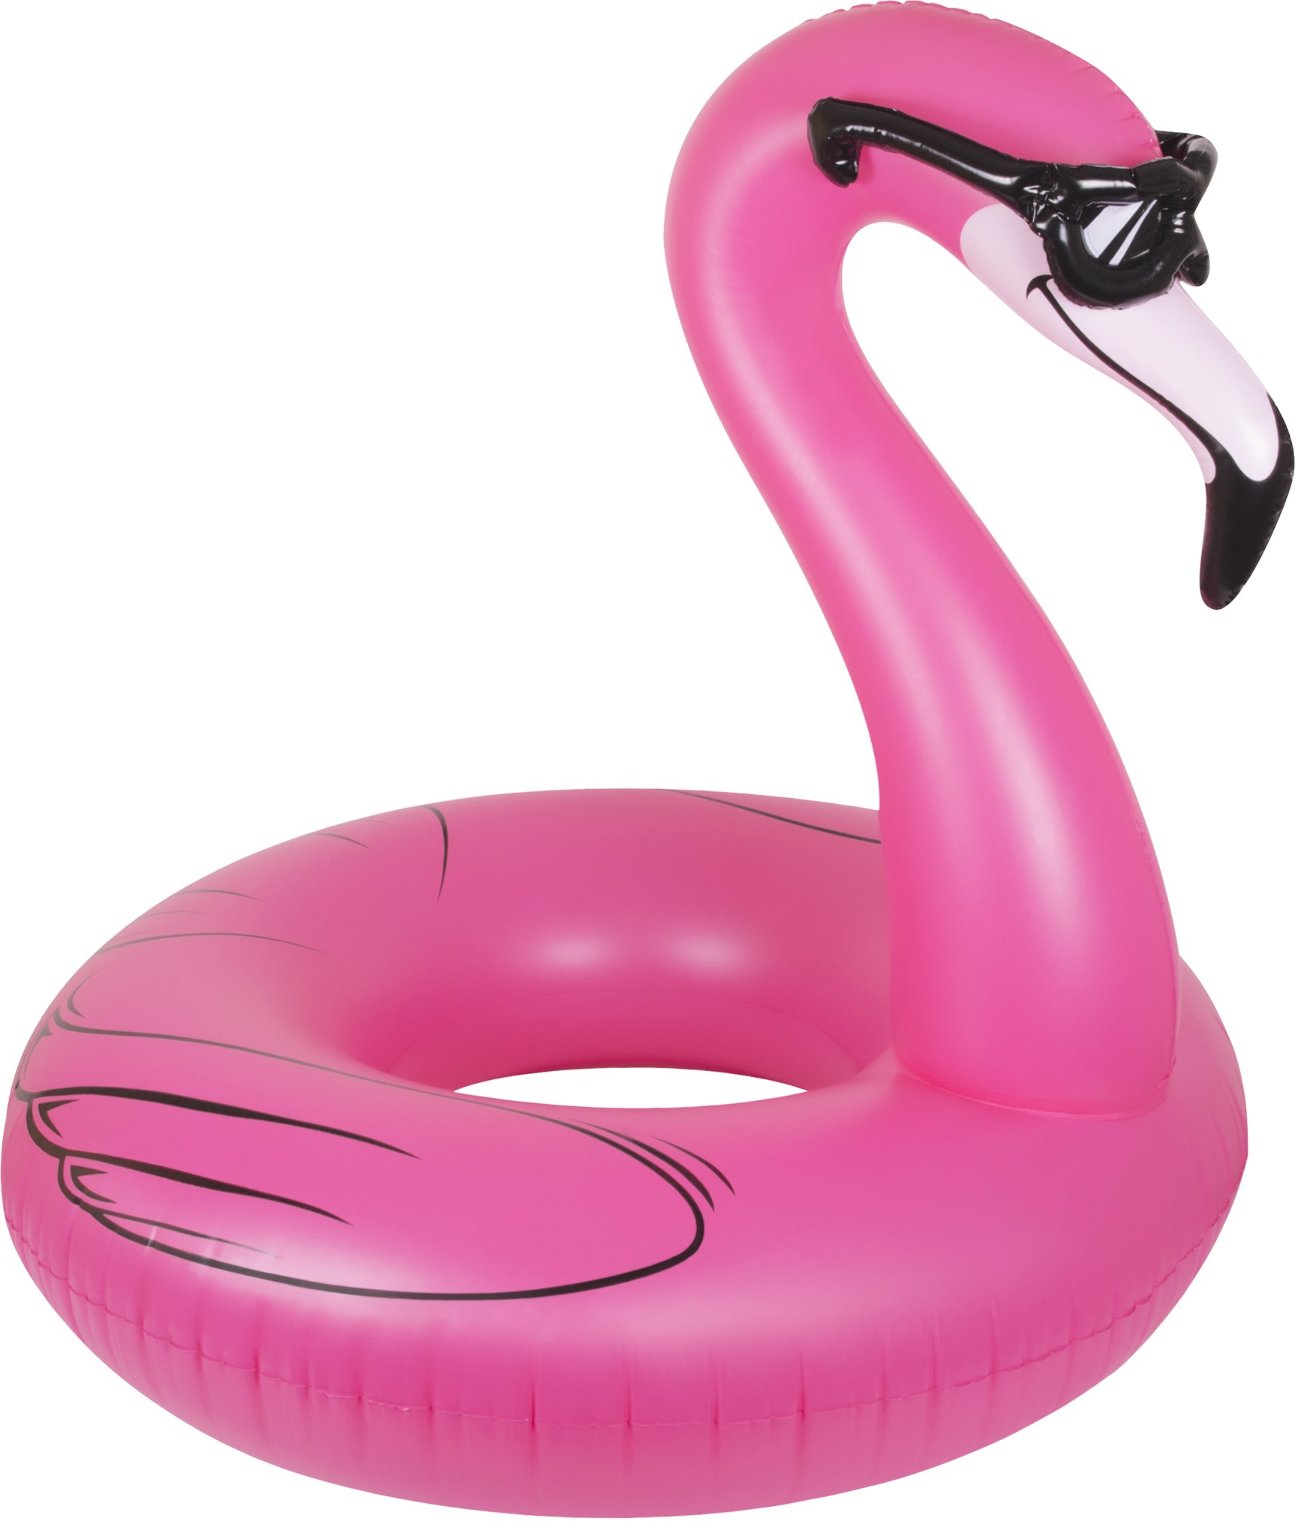 flamingo pool service